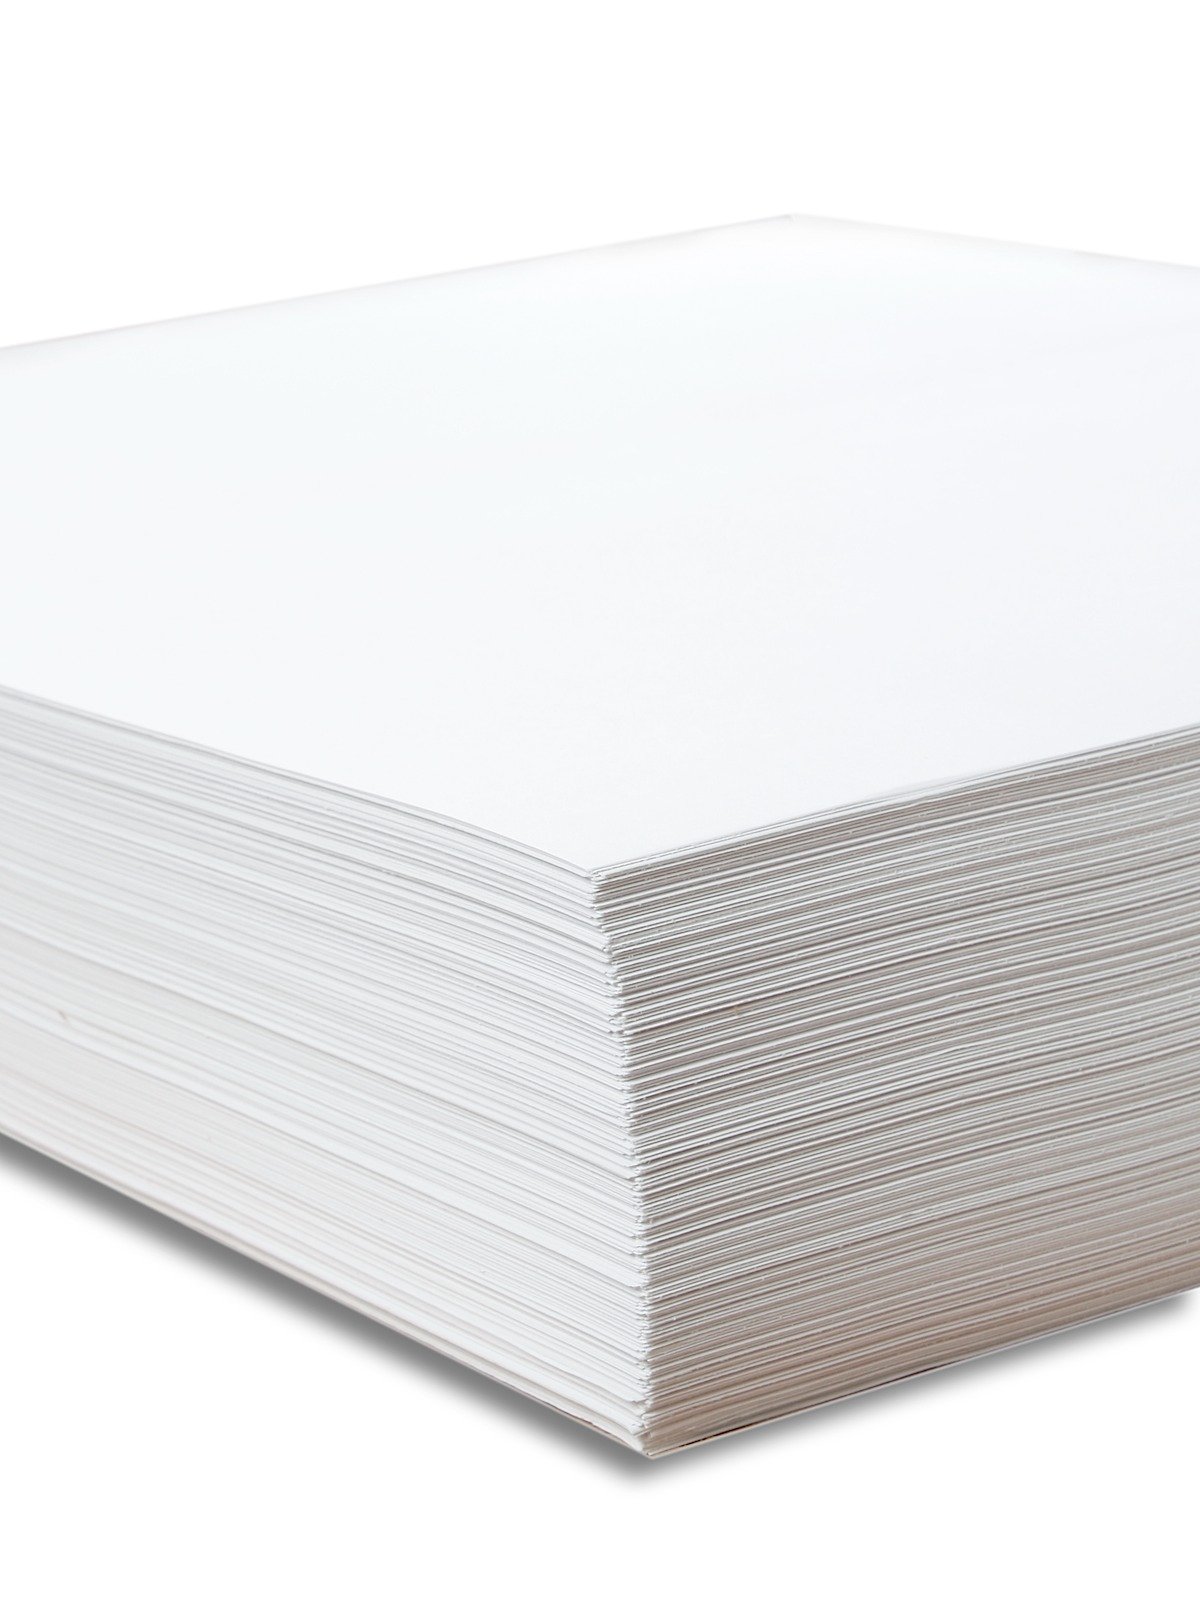 Pacon Medium Weight Drawing Paper 57lb White 24” X 36” 250 Sheets P4726 :  Target